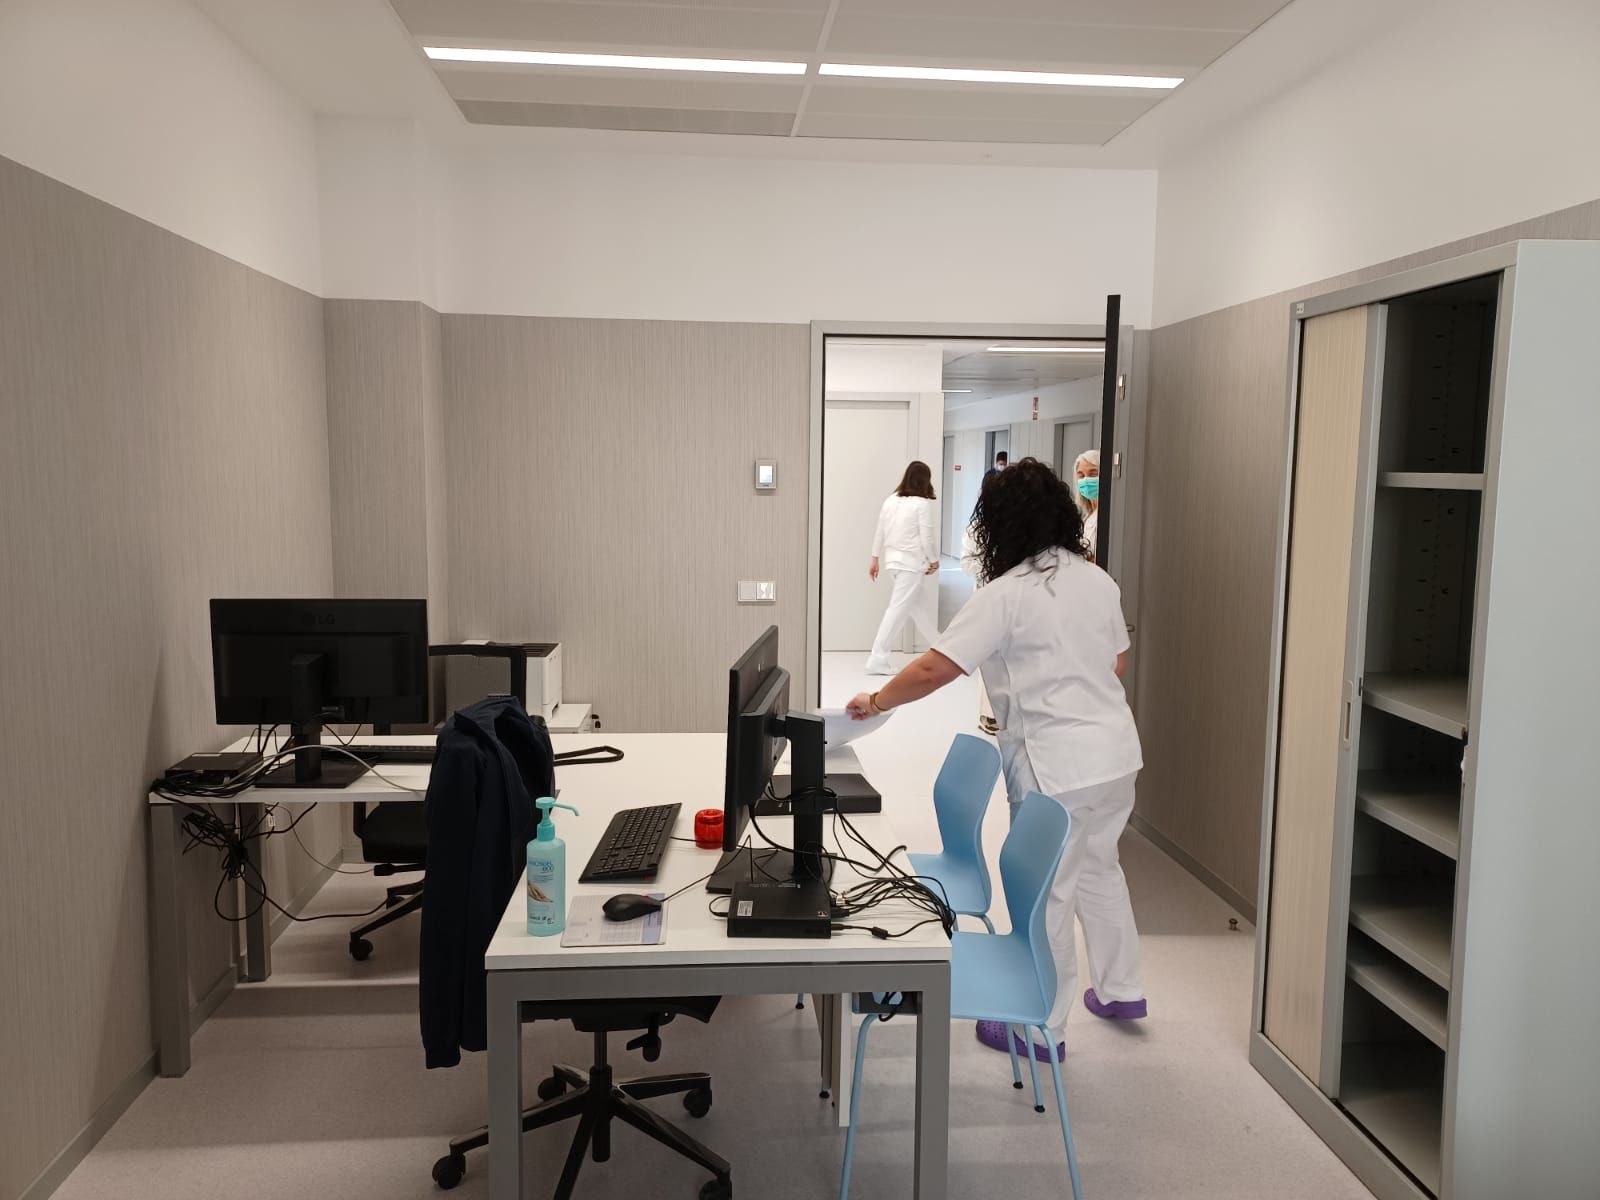 El nuevo hospital de Ontinyent recibe a sus primeros pacientes